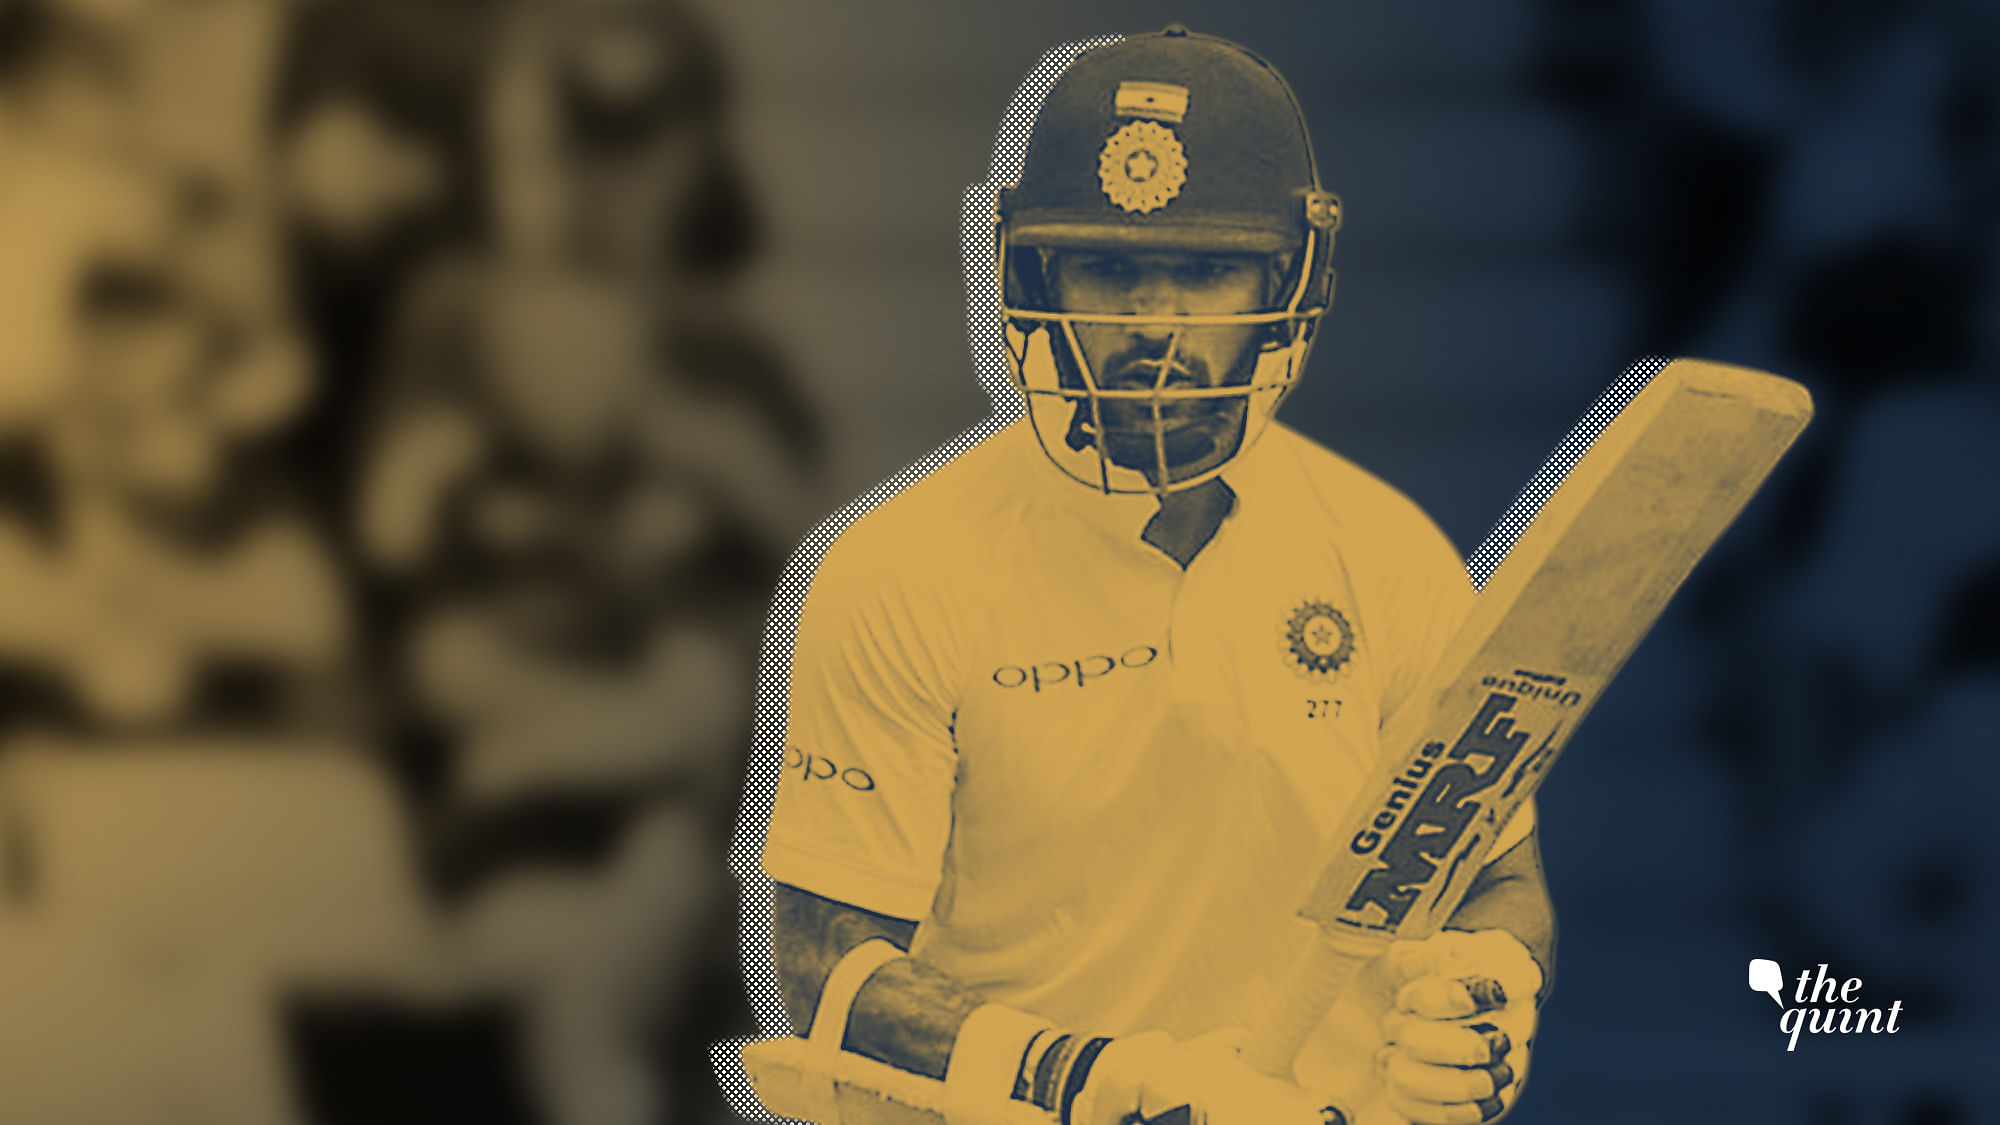 Shikhar Dhawan scored 162 runs in 8 innings during the Test series against England.